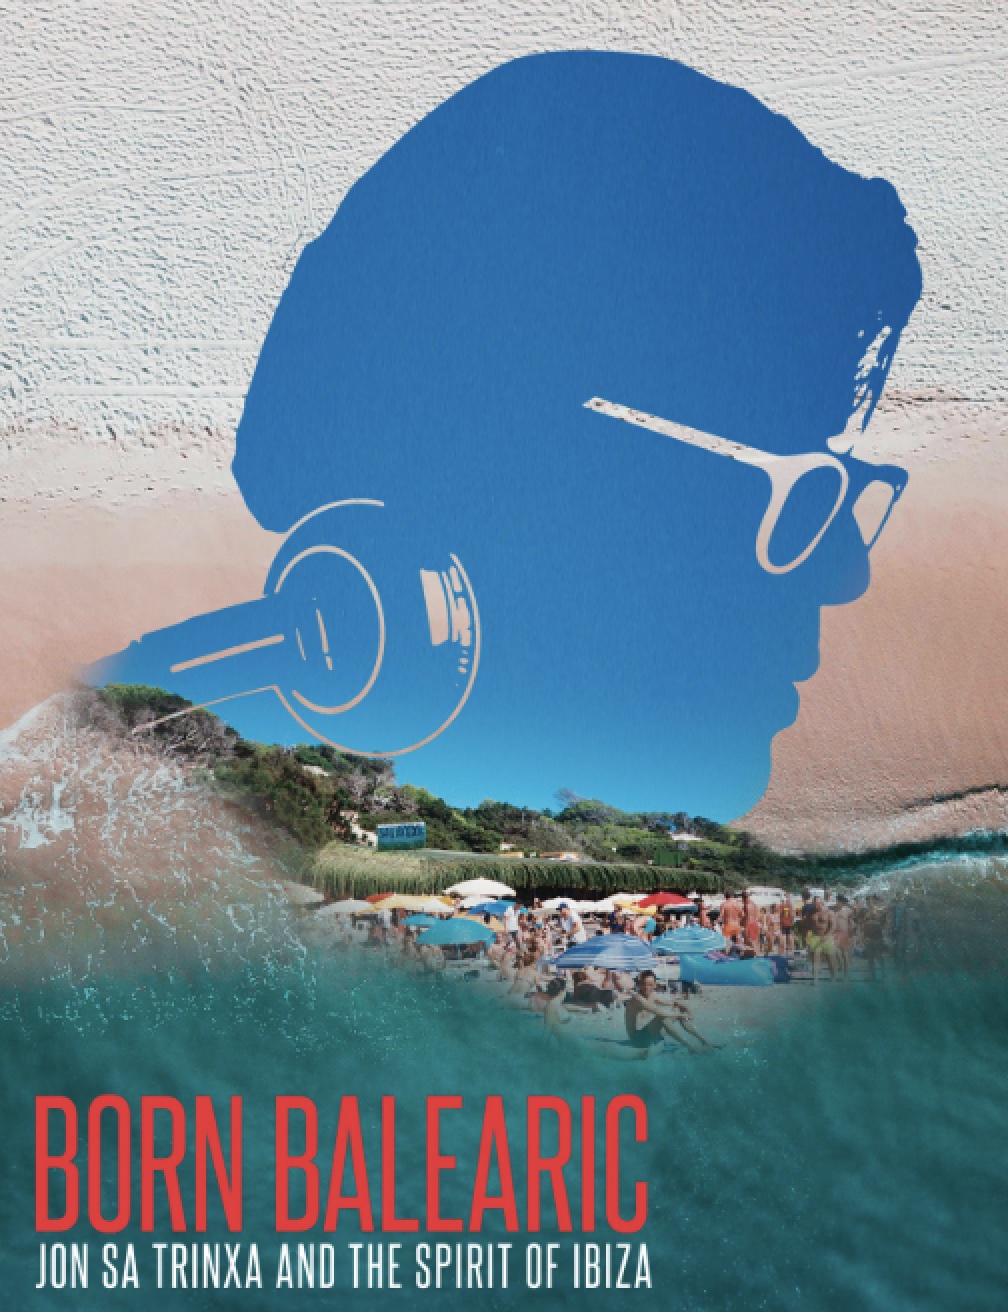 Born Balearic promo